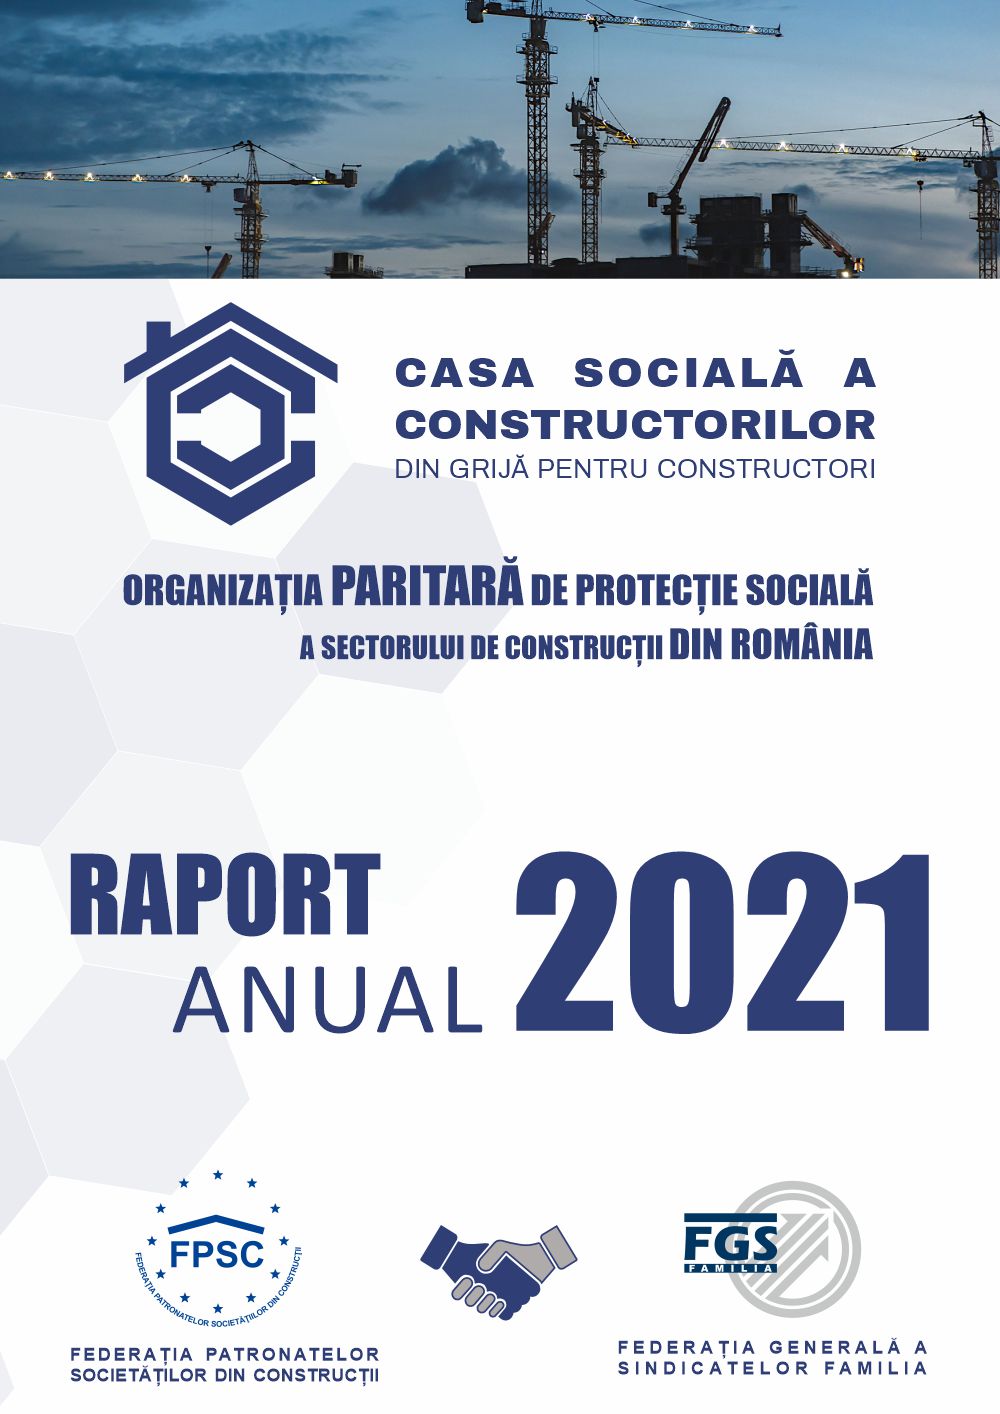 Report 2021